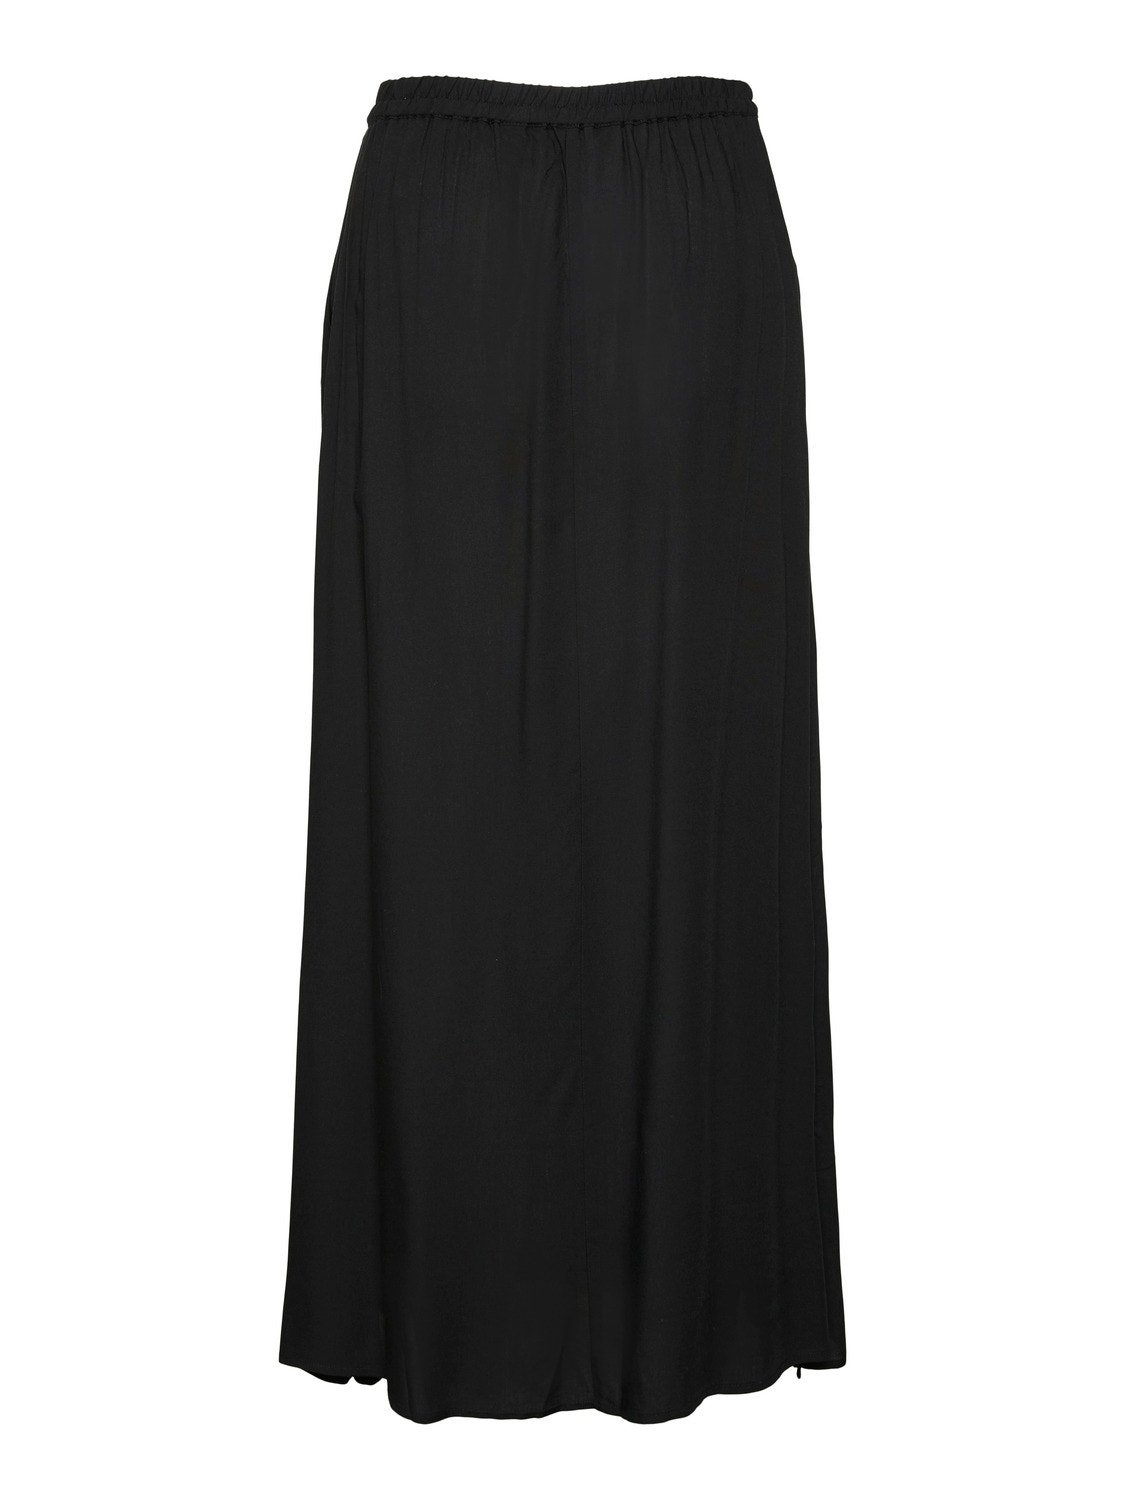 Vero Moda VMEASY Long skirt -Black - 10245157